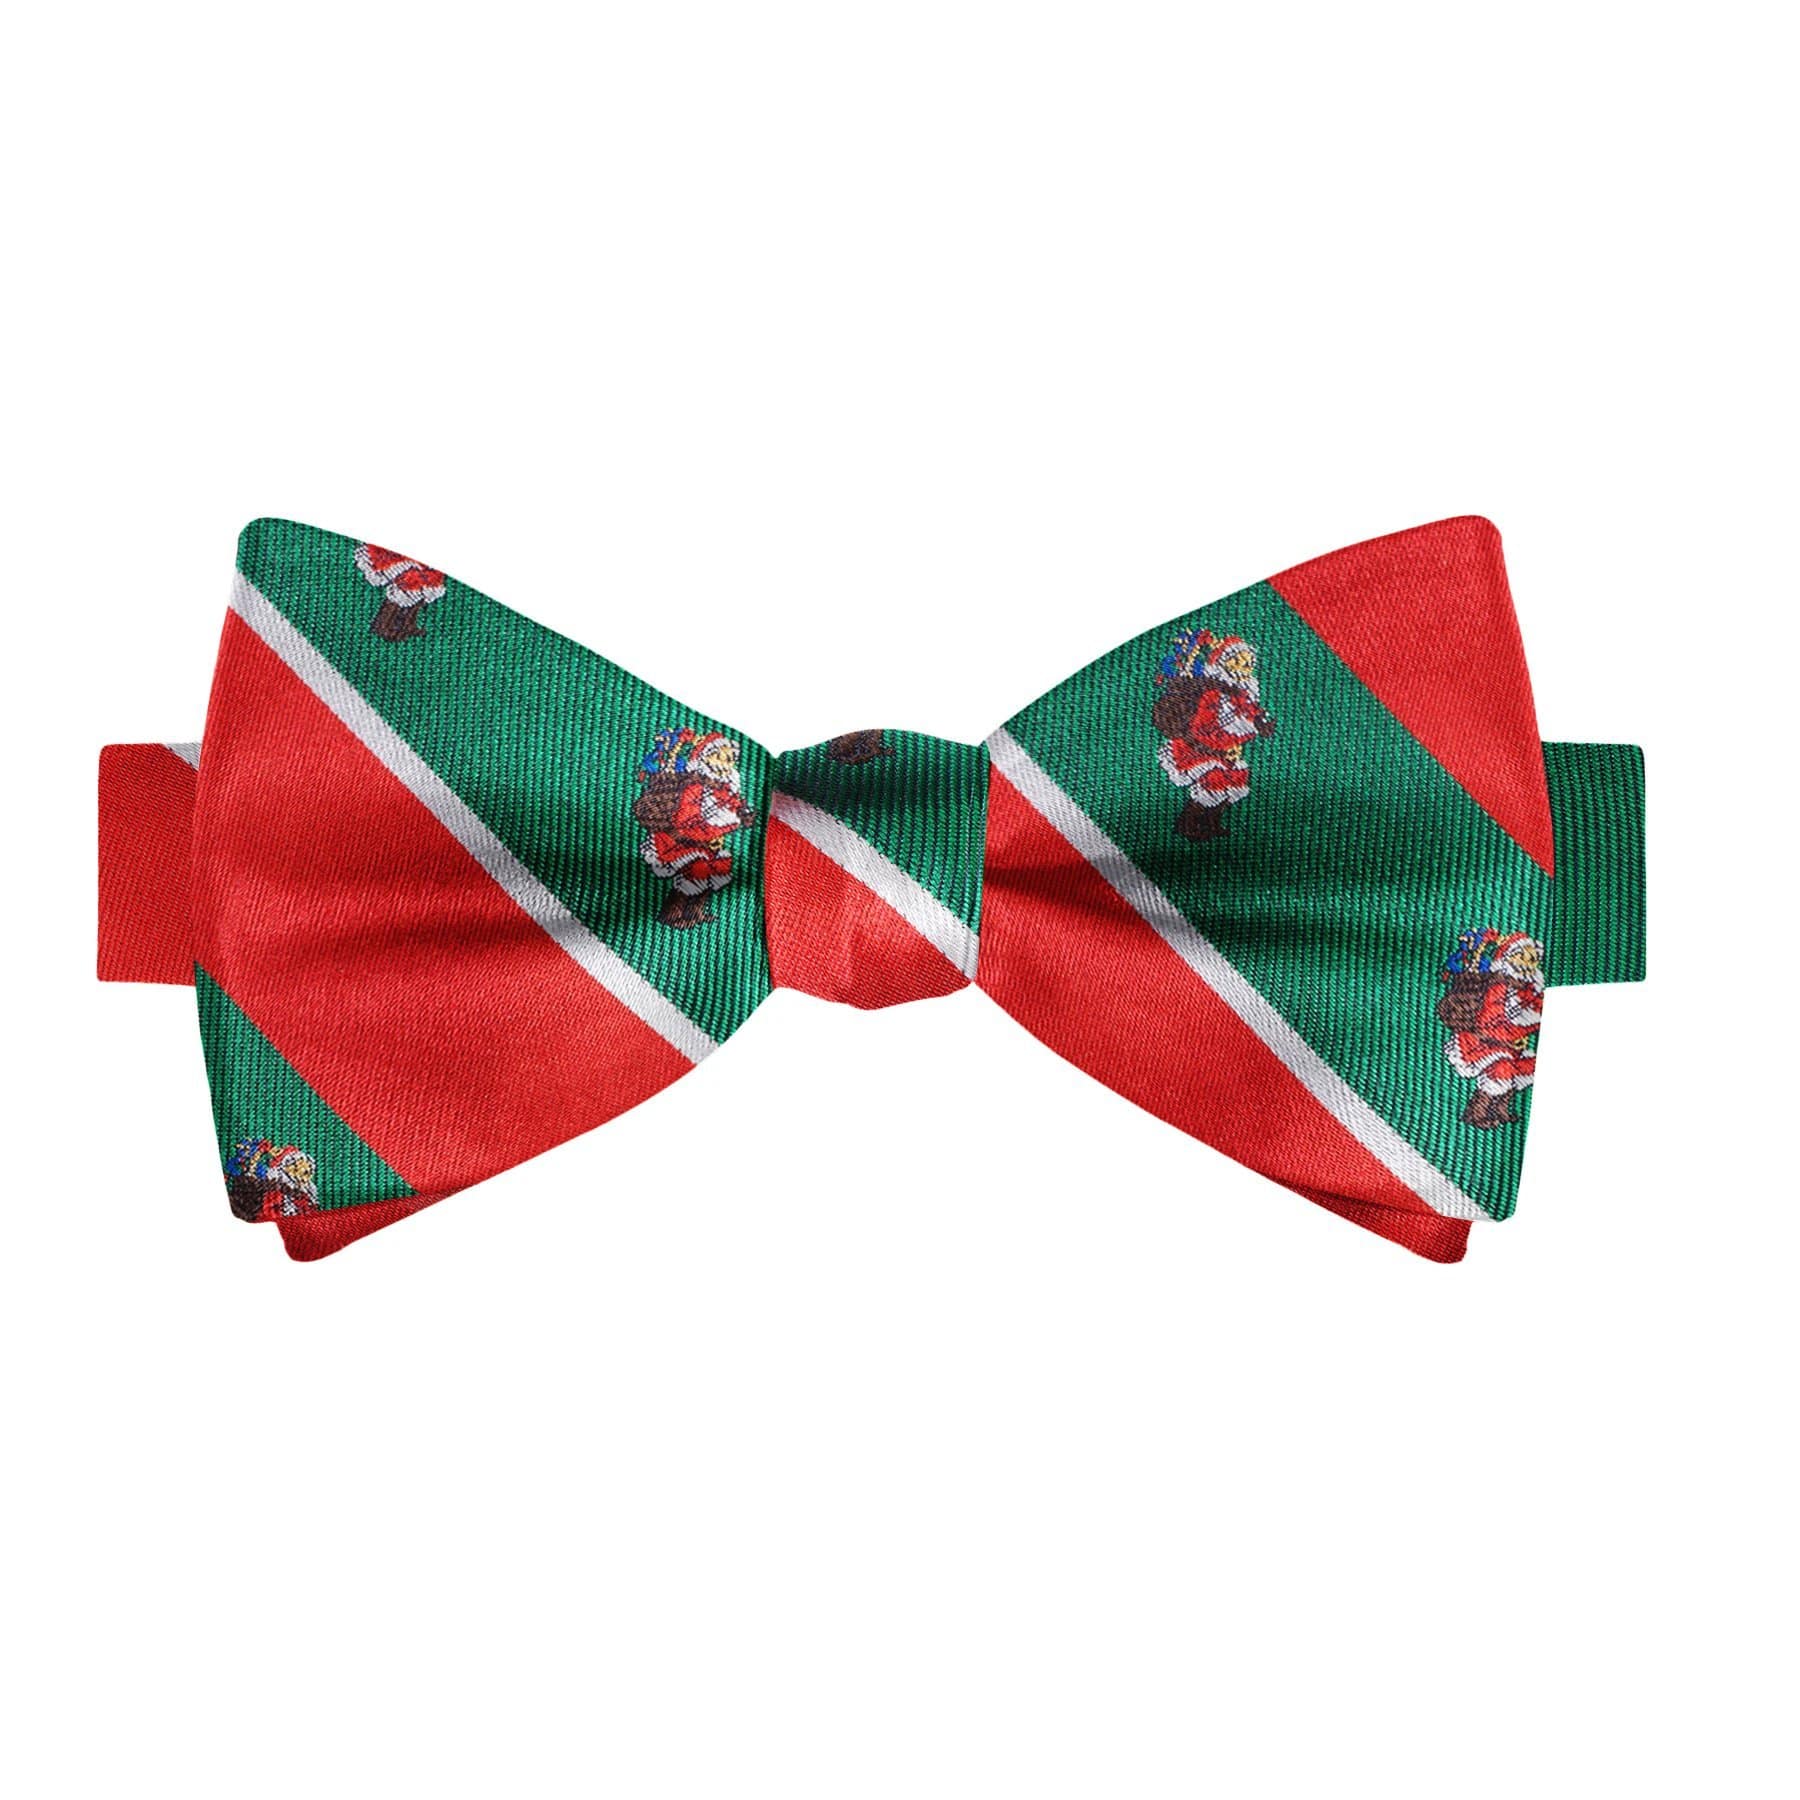 Claus Christmas Bow Tie - Tie, bowtie, pocket square  | Kissties